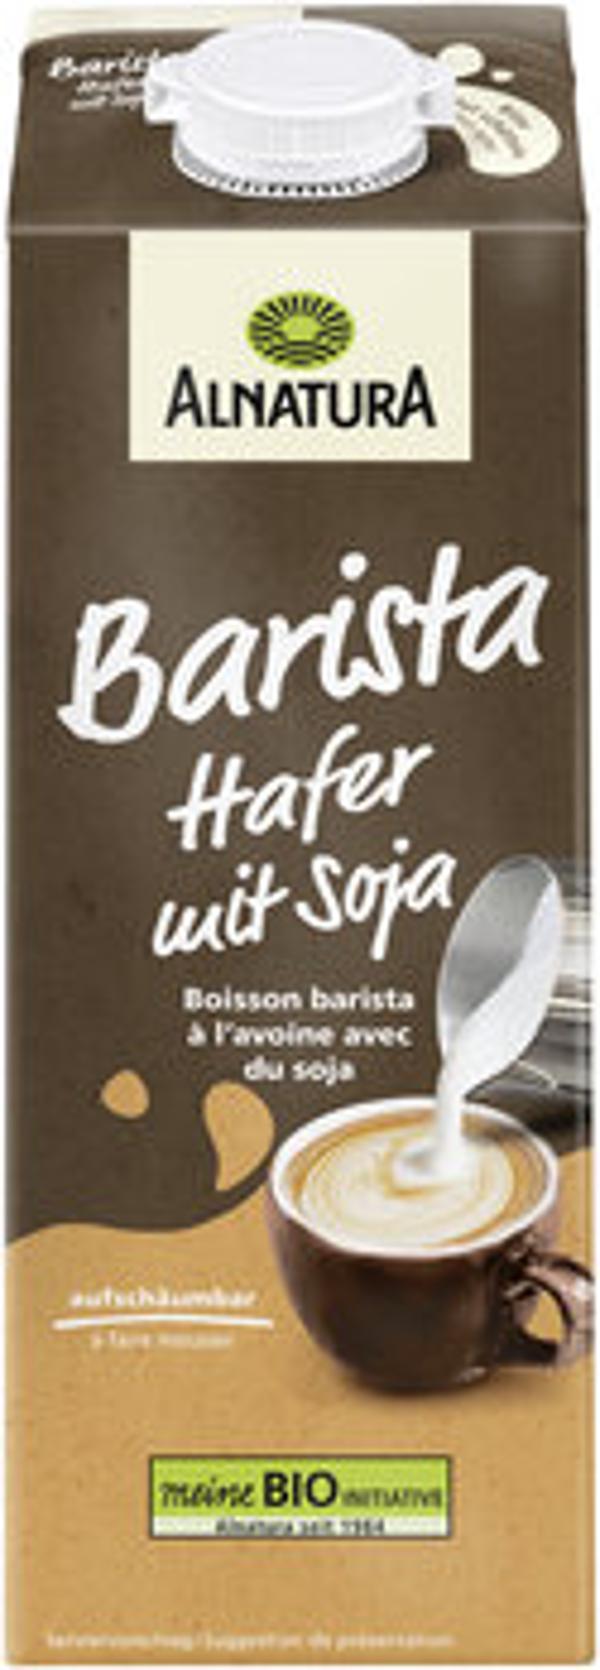 Produktfoto zu Alnatura Barista Hafer mit Soja 1L